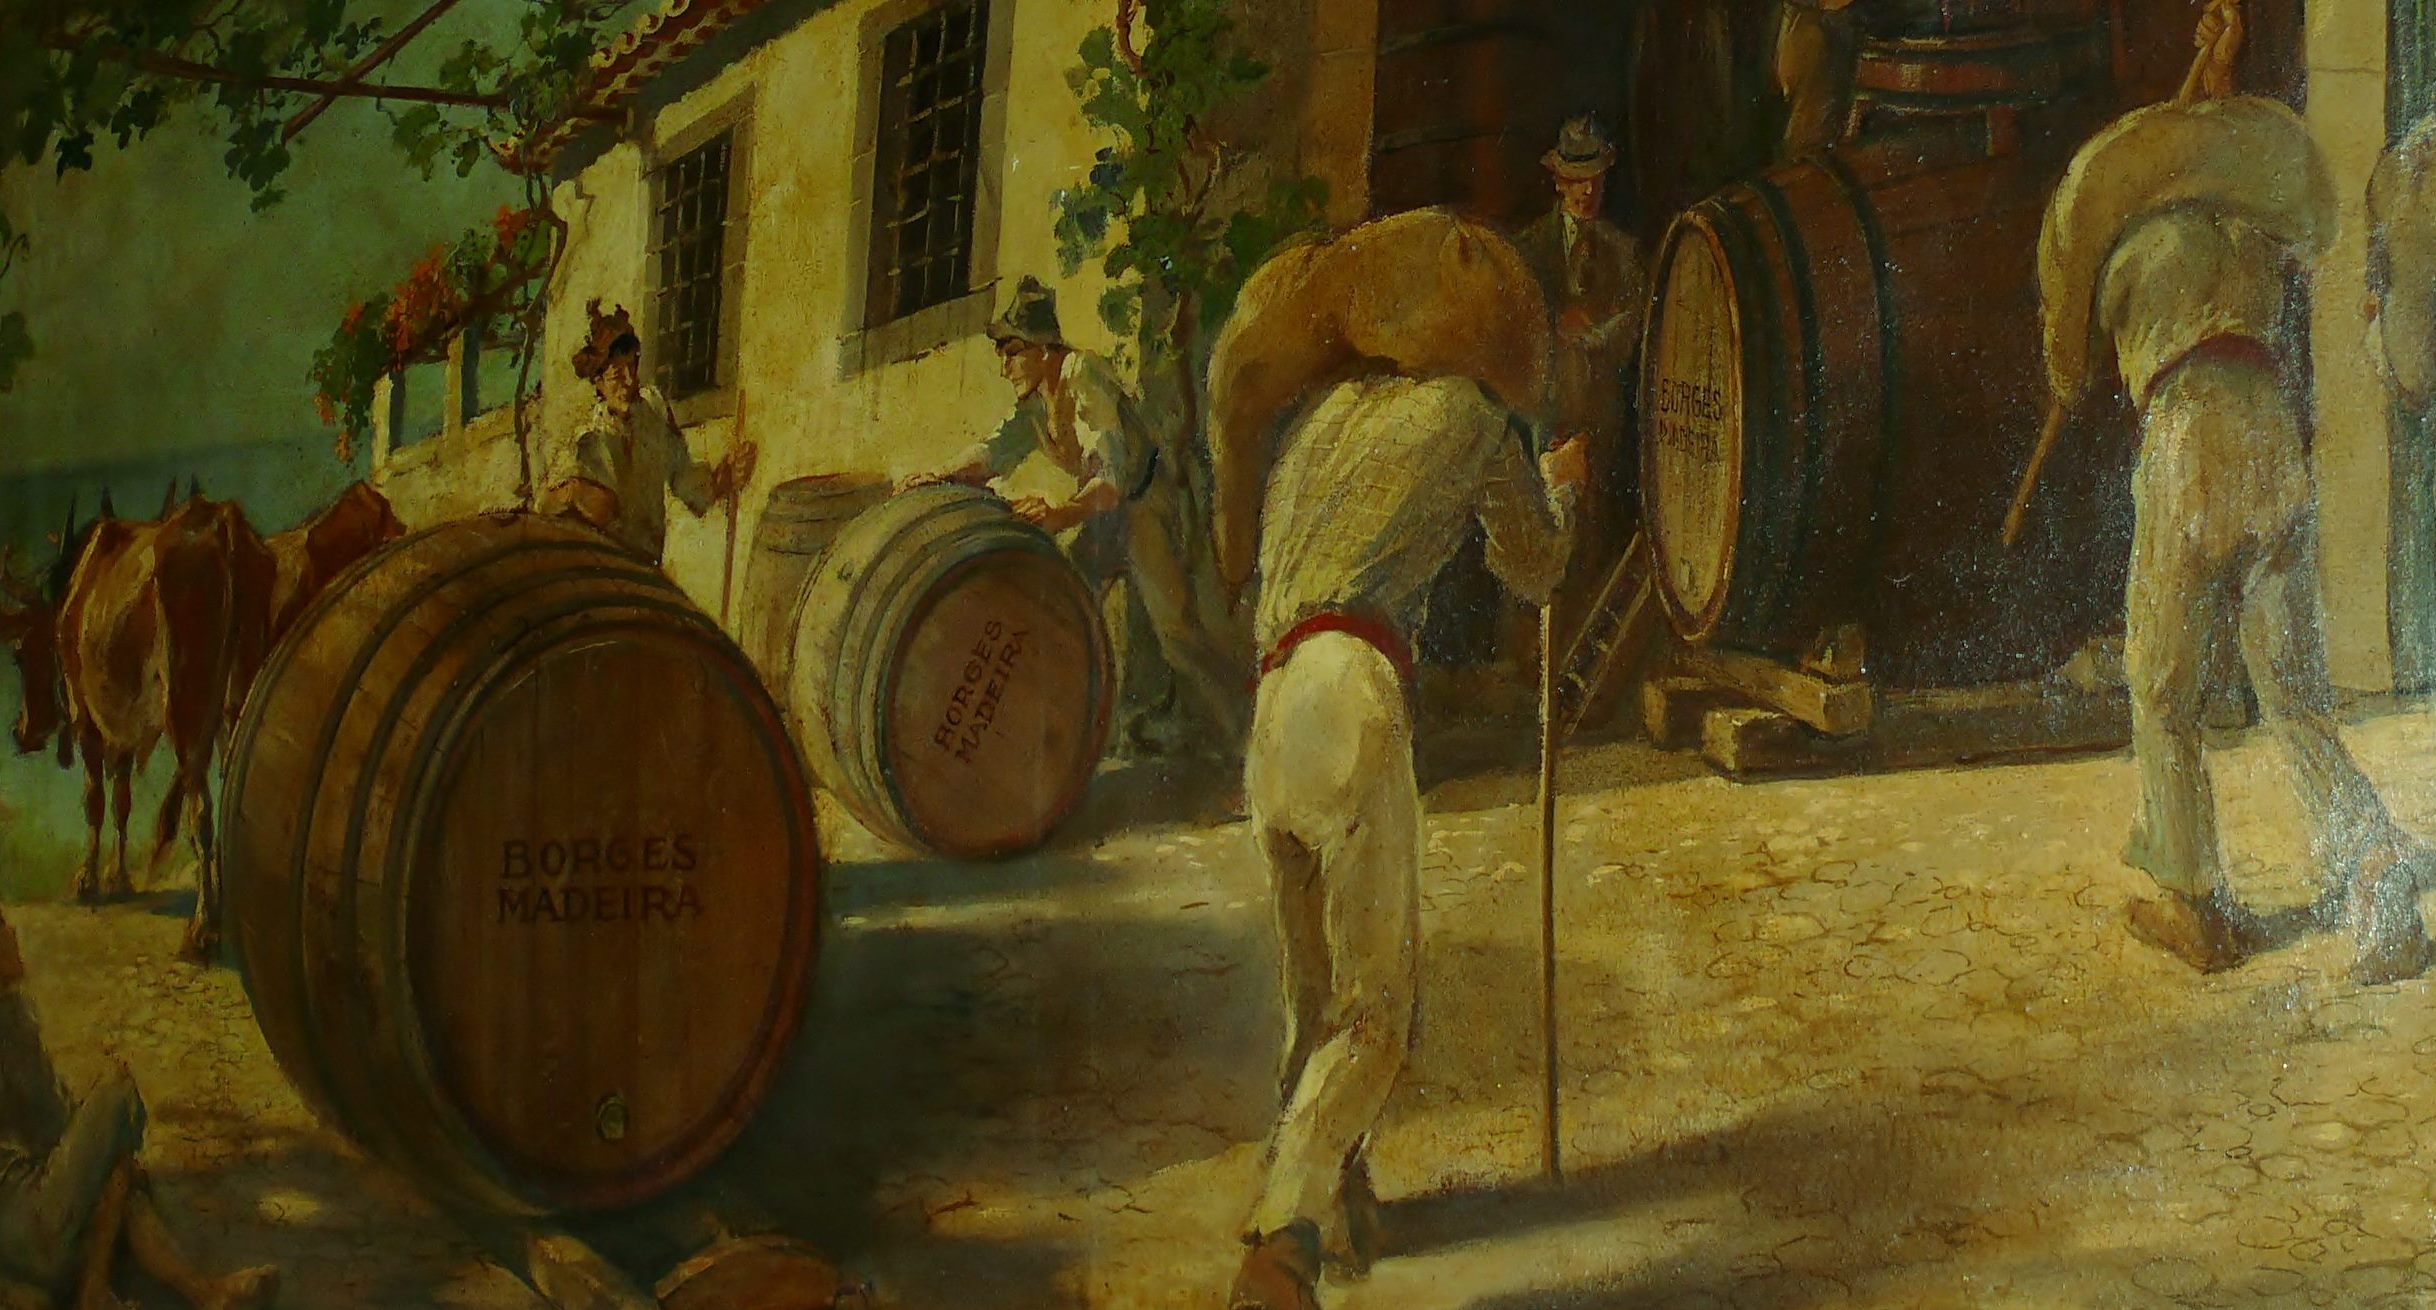 Wine skins arrive at Borges